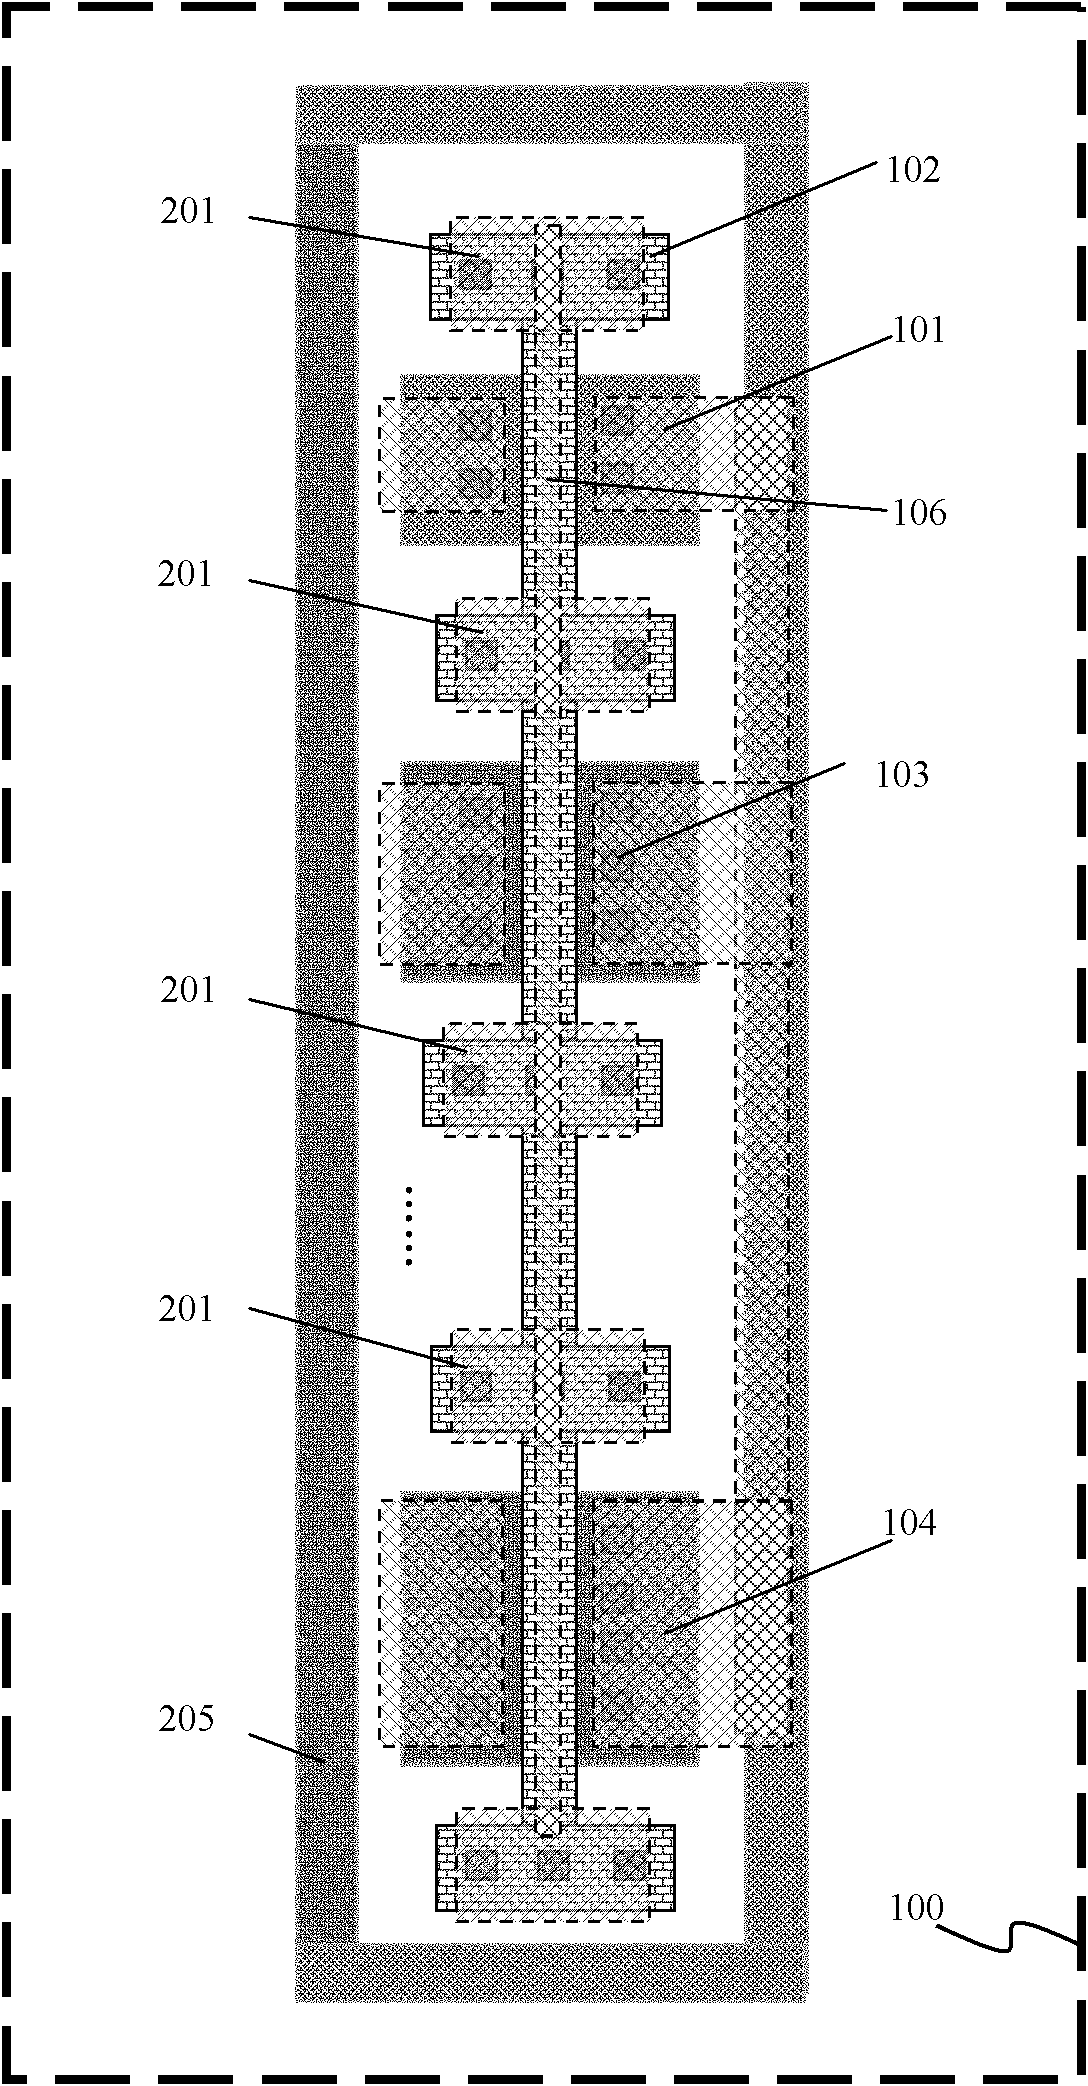 Grid resistor test structure for MOS transistor